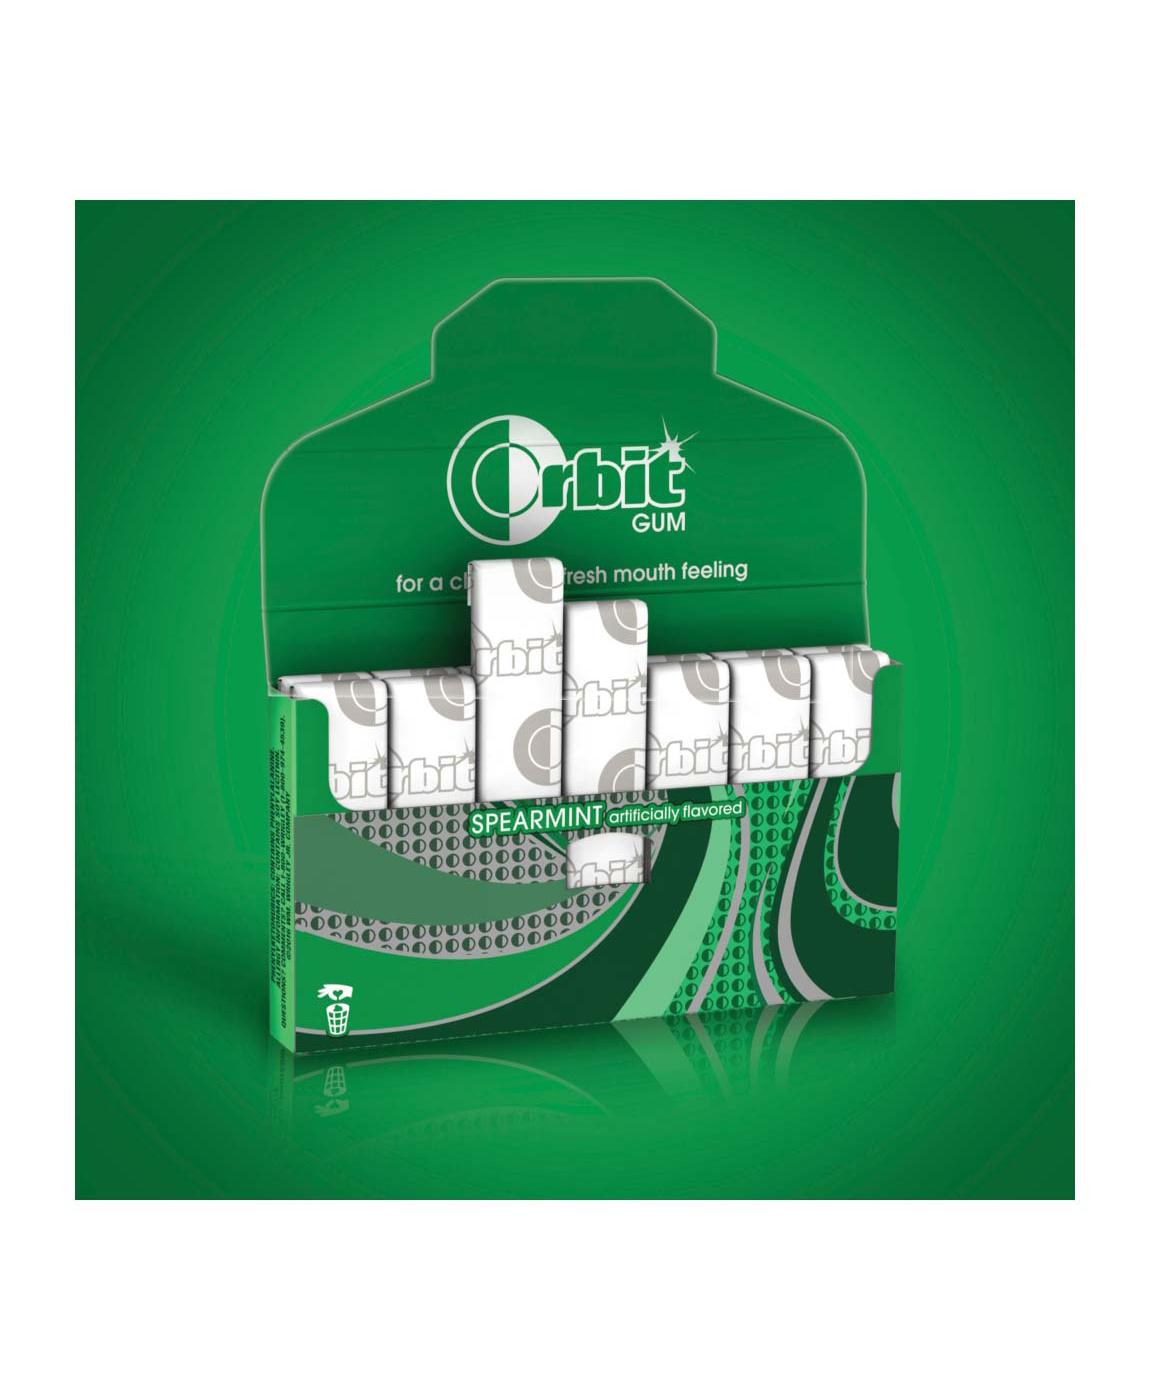 Orbit Sugarfree Chewing Gum - Spearmint, 3 Pk; image 4 of 5